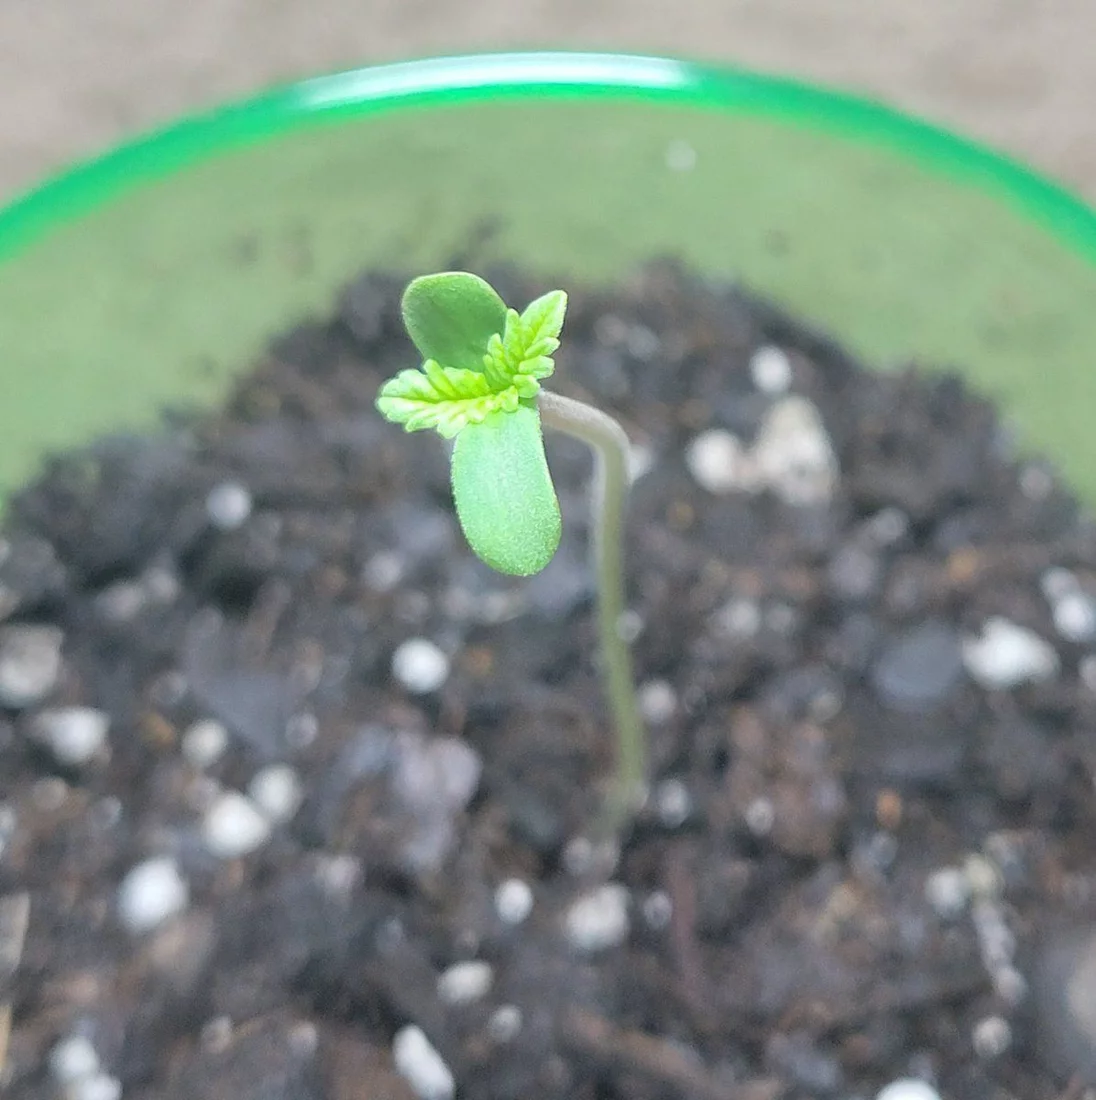 Bag seed grow possibly gmonana